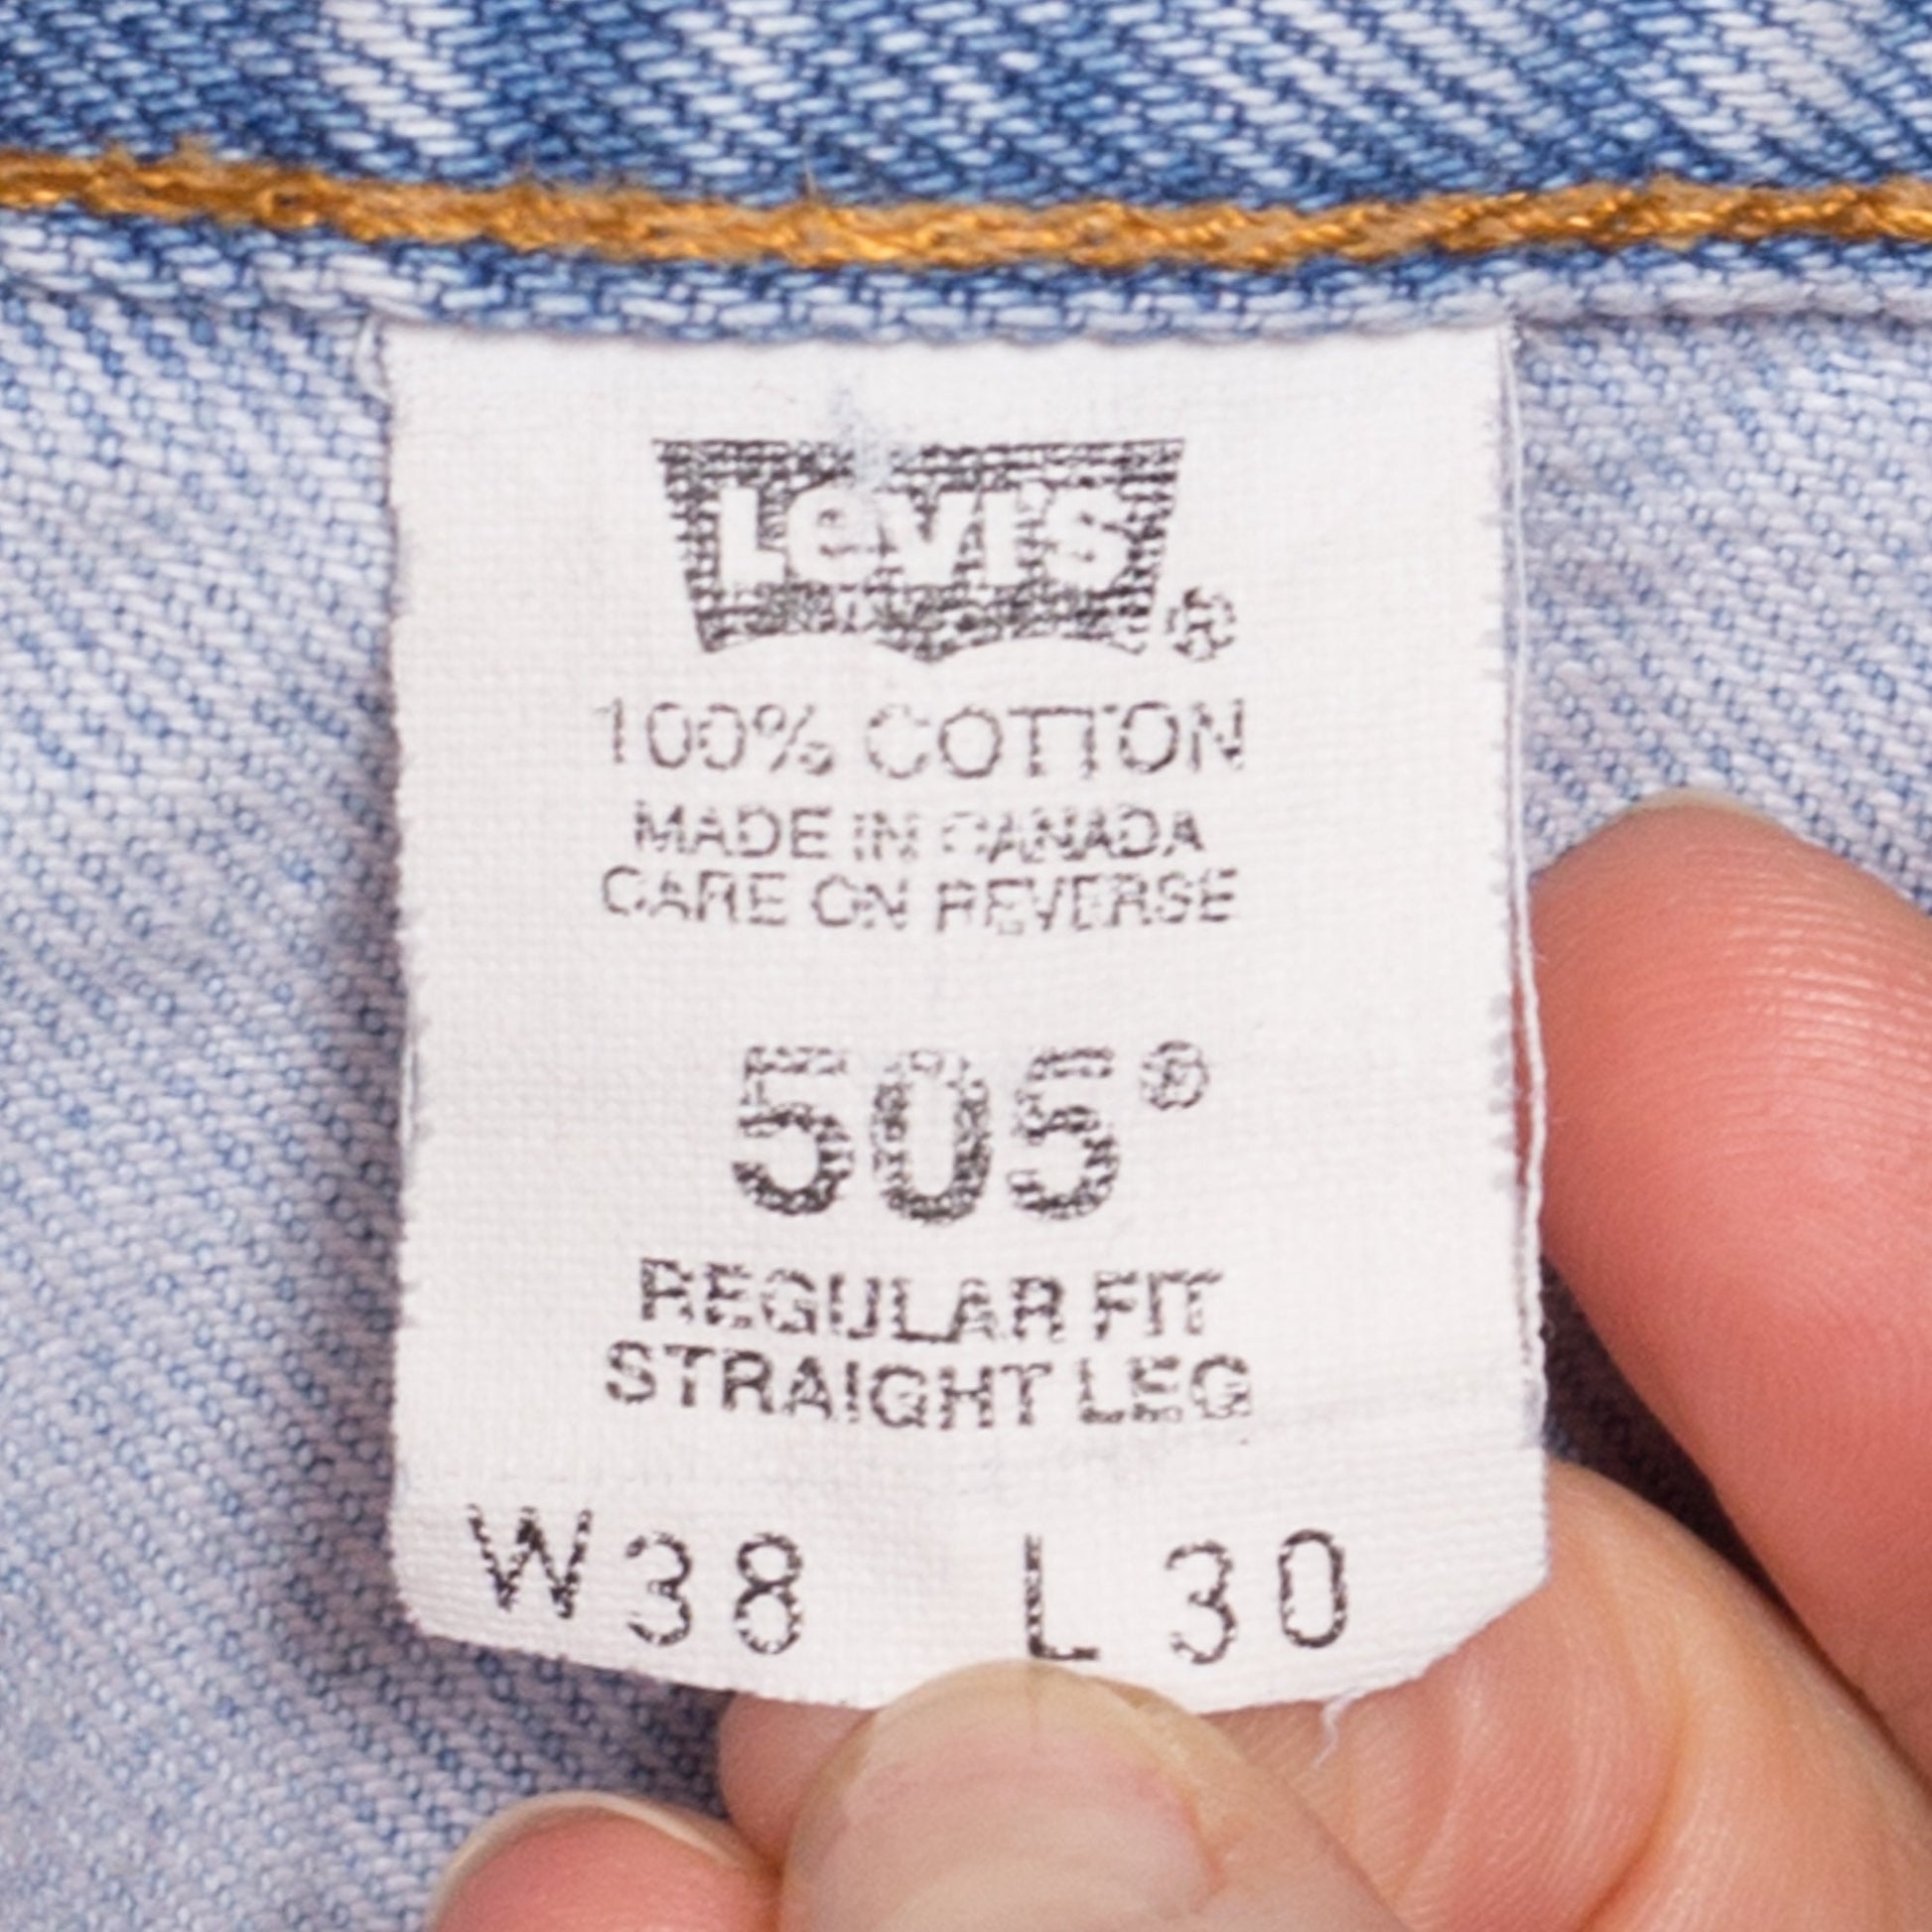 90s Levi's 505 Light Wash Jeans - 38x30 | Vintage Regular Fit Straight Leg Denim Dad Jeans